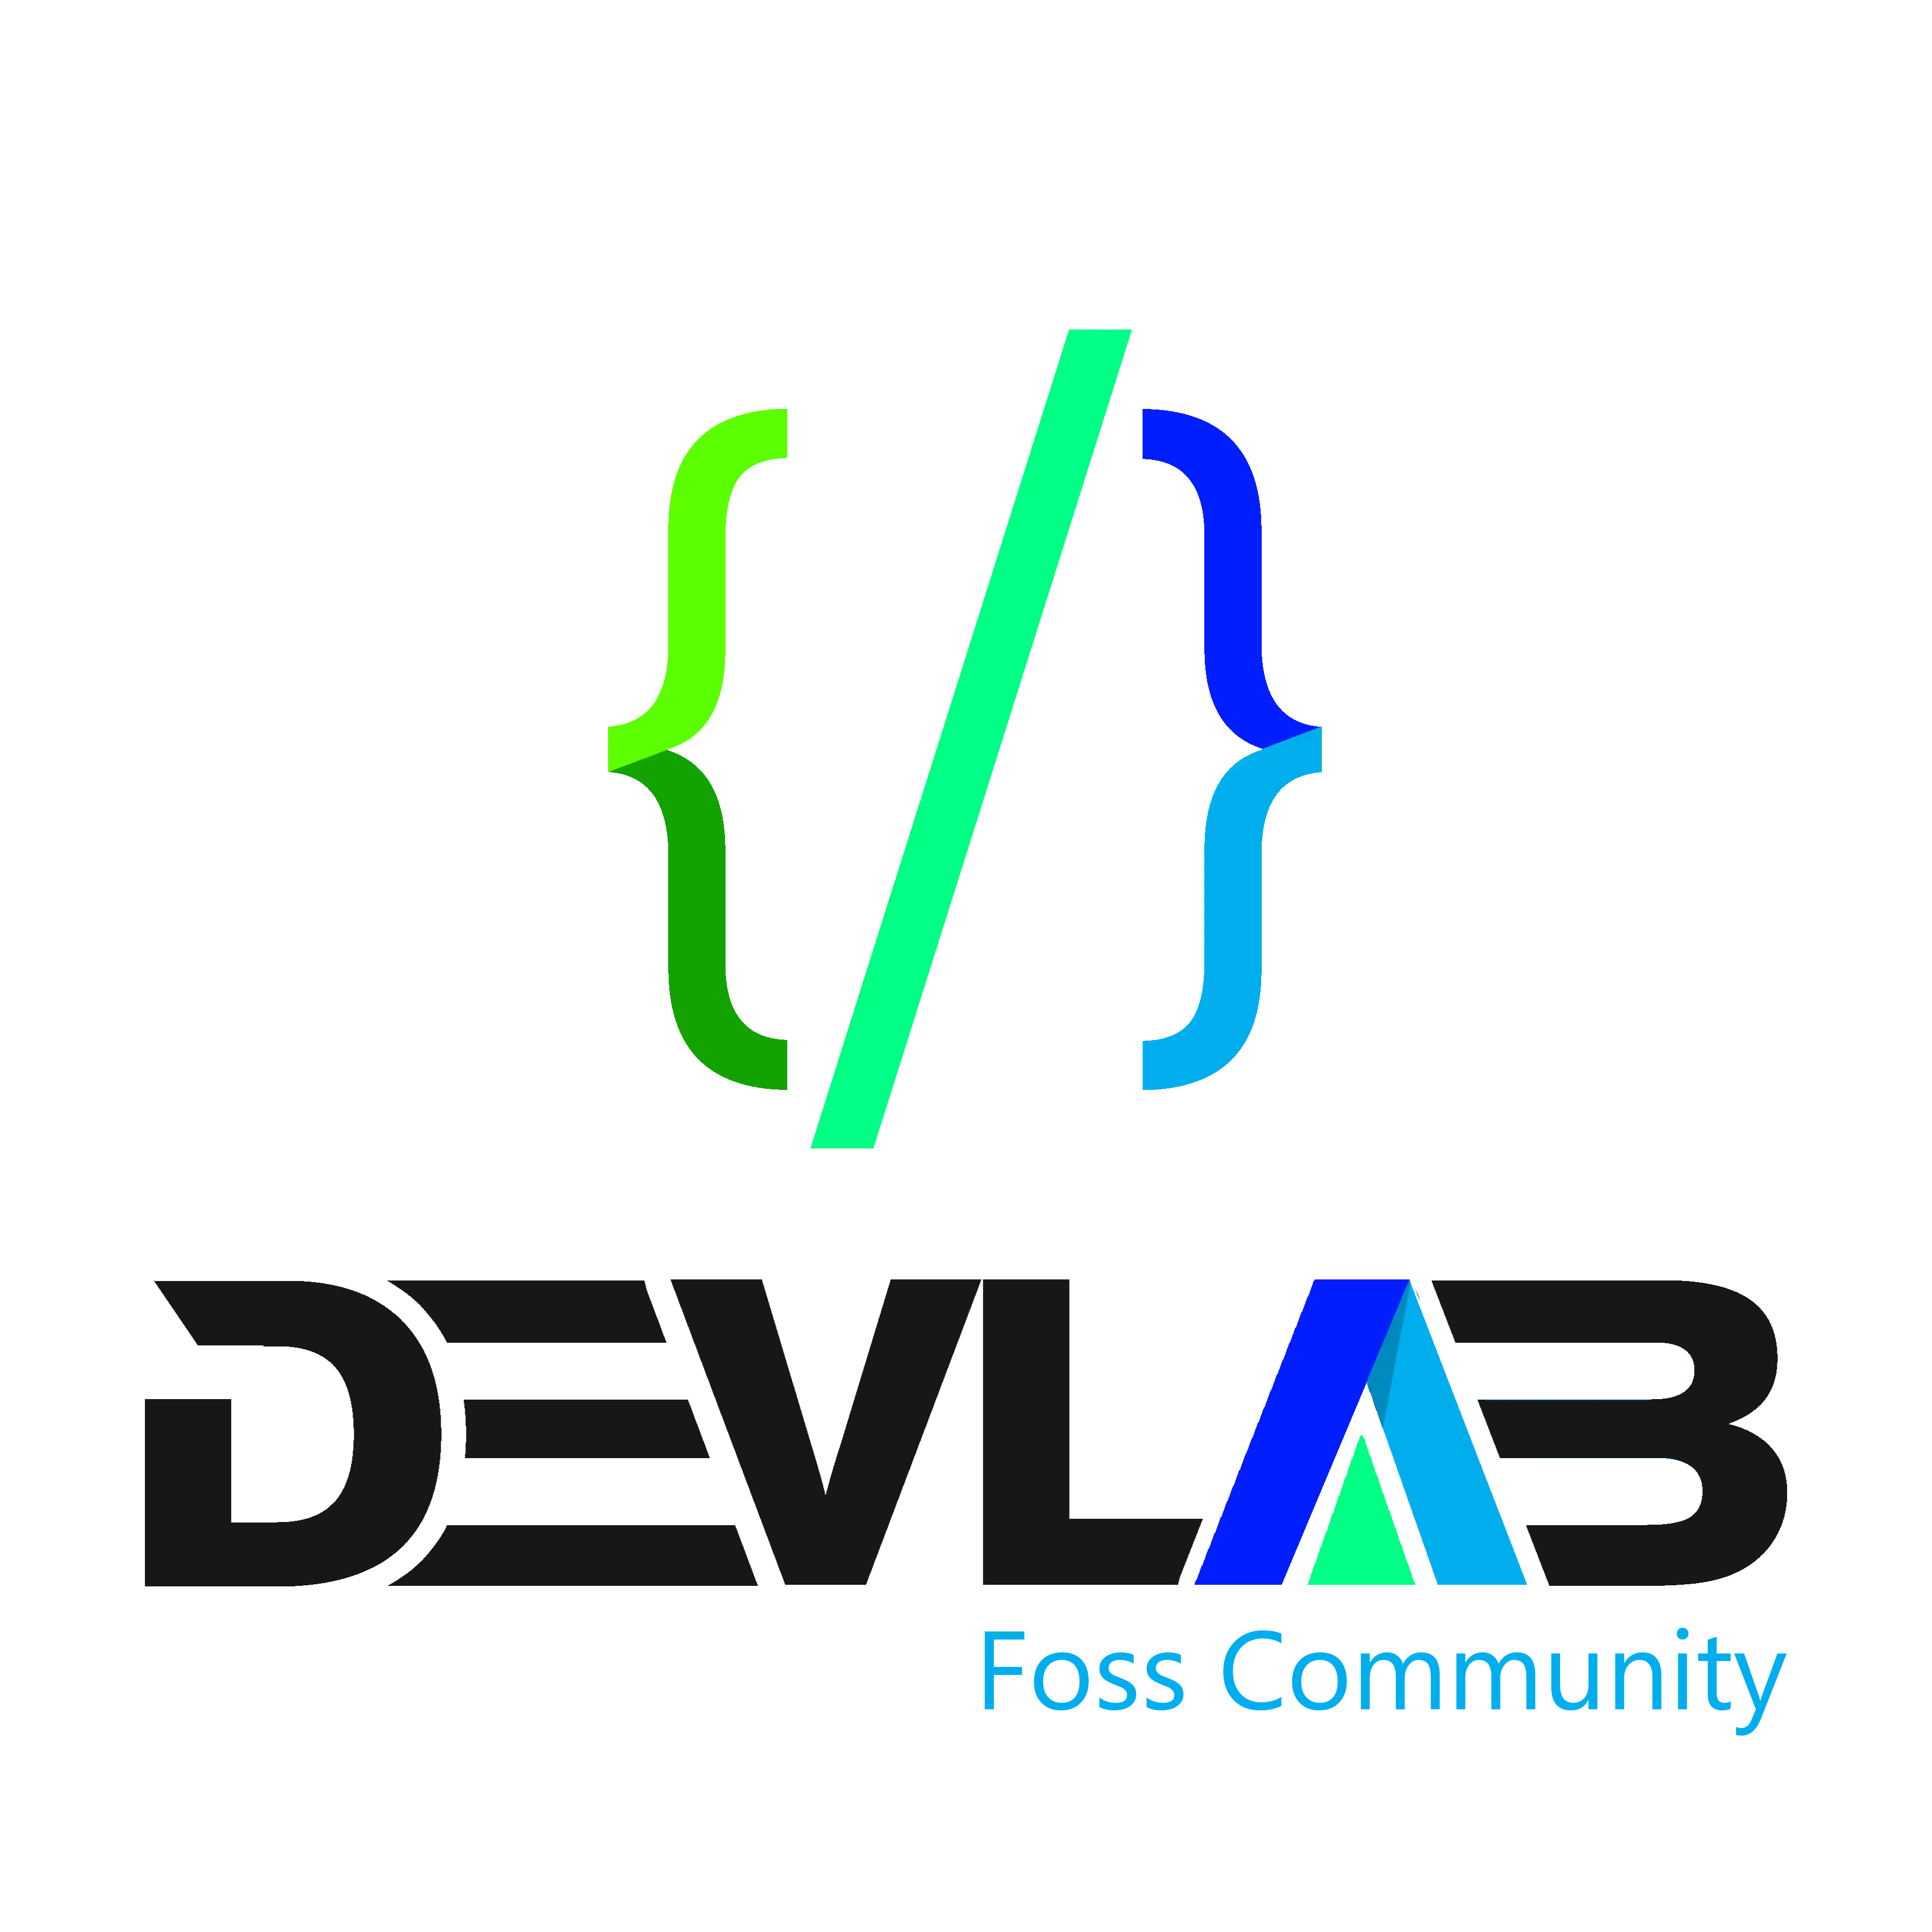 FOSS Community of NSBM - DevLab